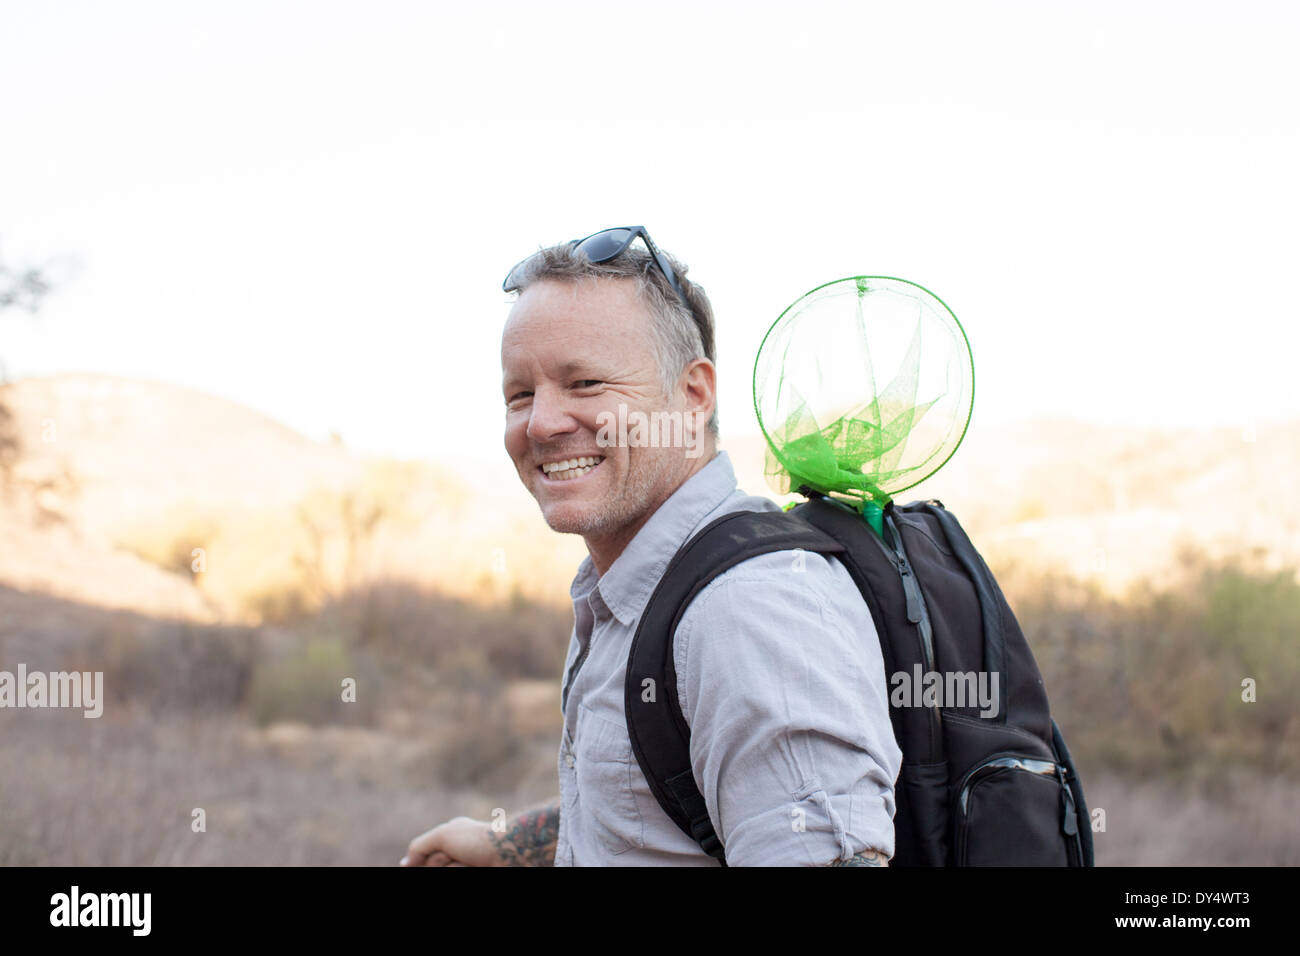 Candid portrait of smiling male hiker Banque D'Images